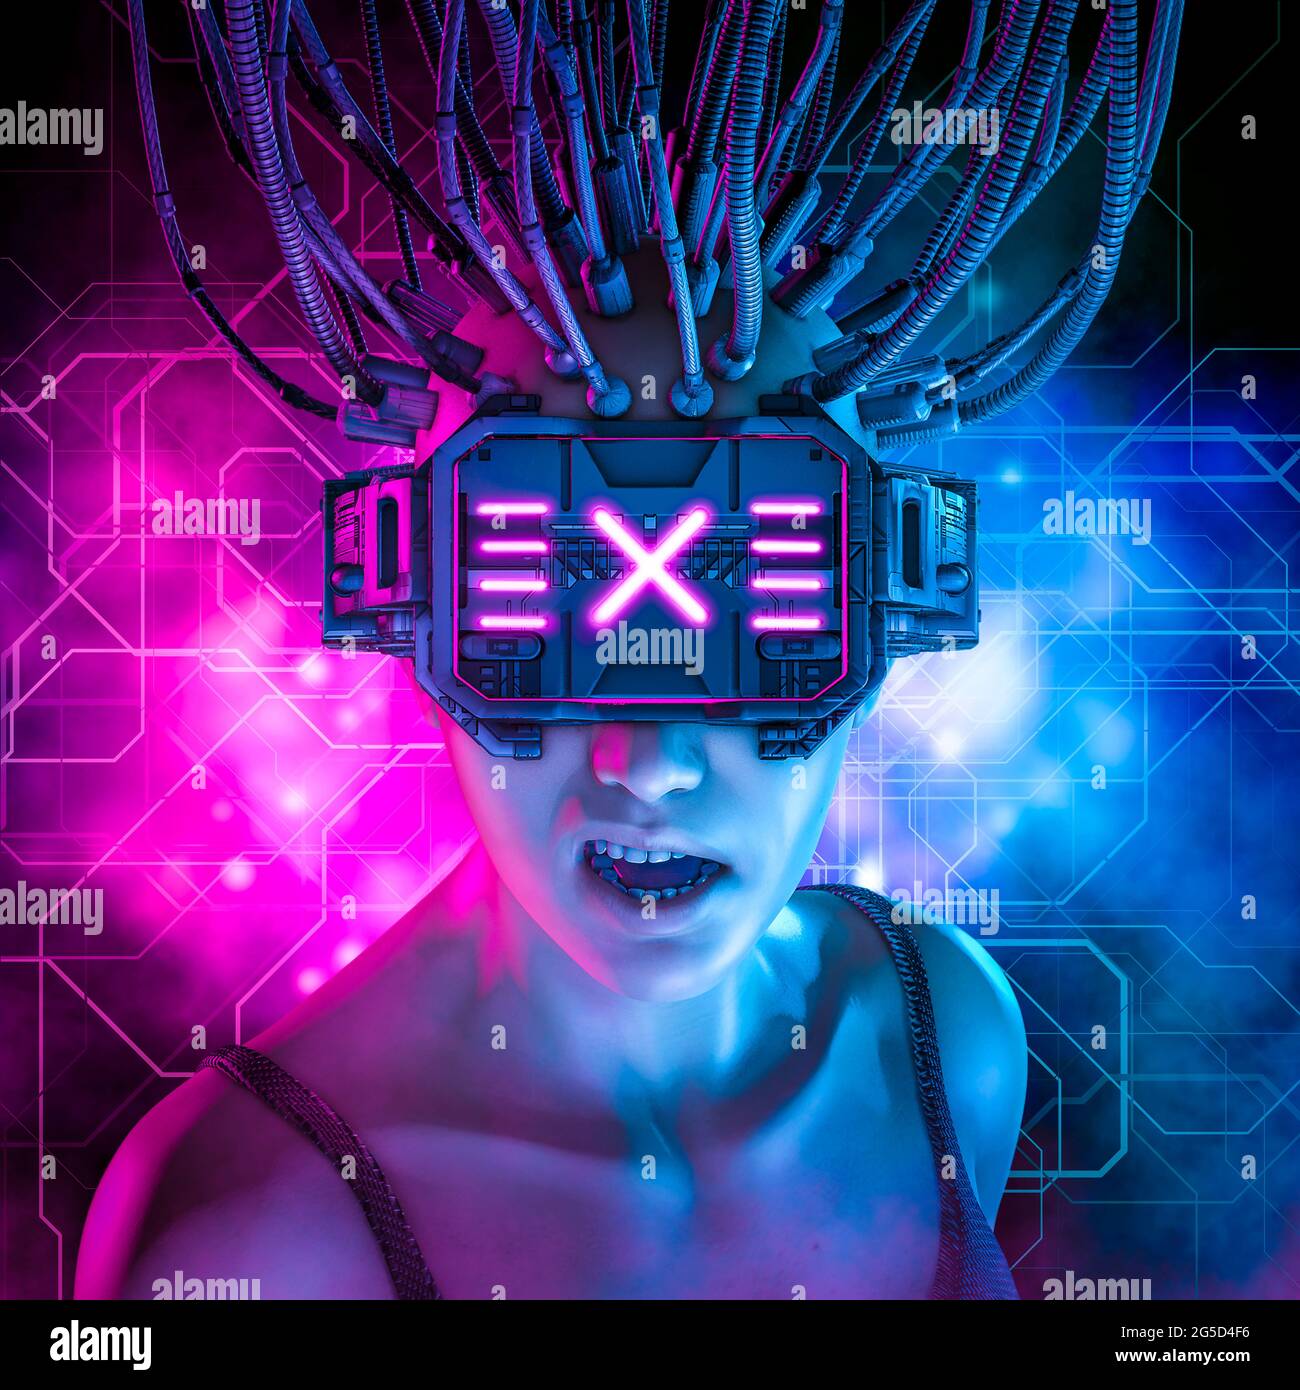 Hardwired cyberpunk girl / 3D illustration of science fiction cyberpunk female character wearing futuristic virtual reality glasses Stock Photo